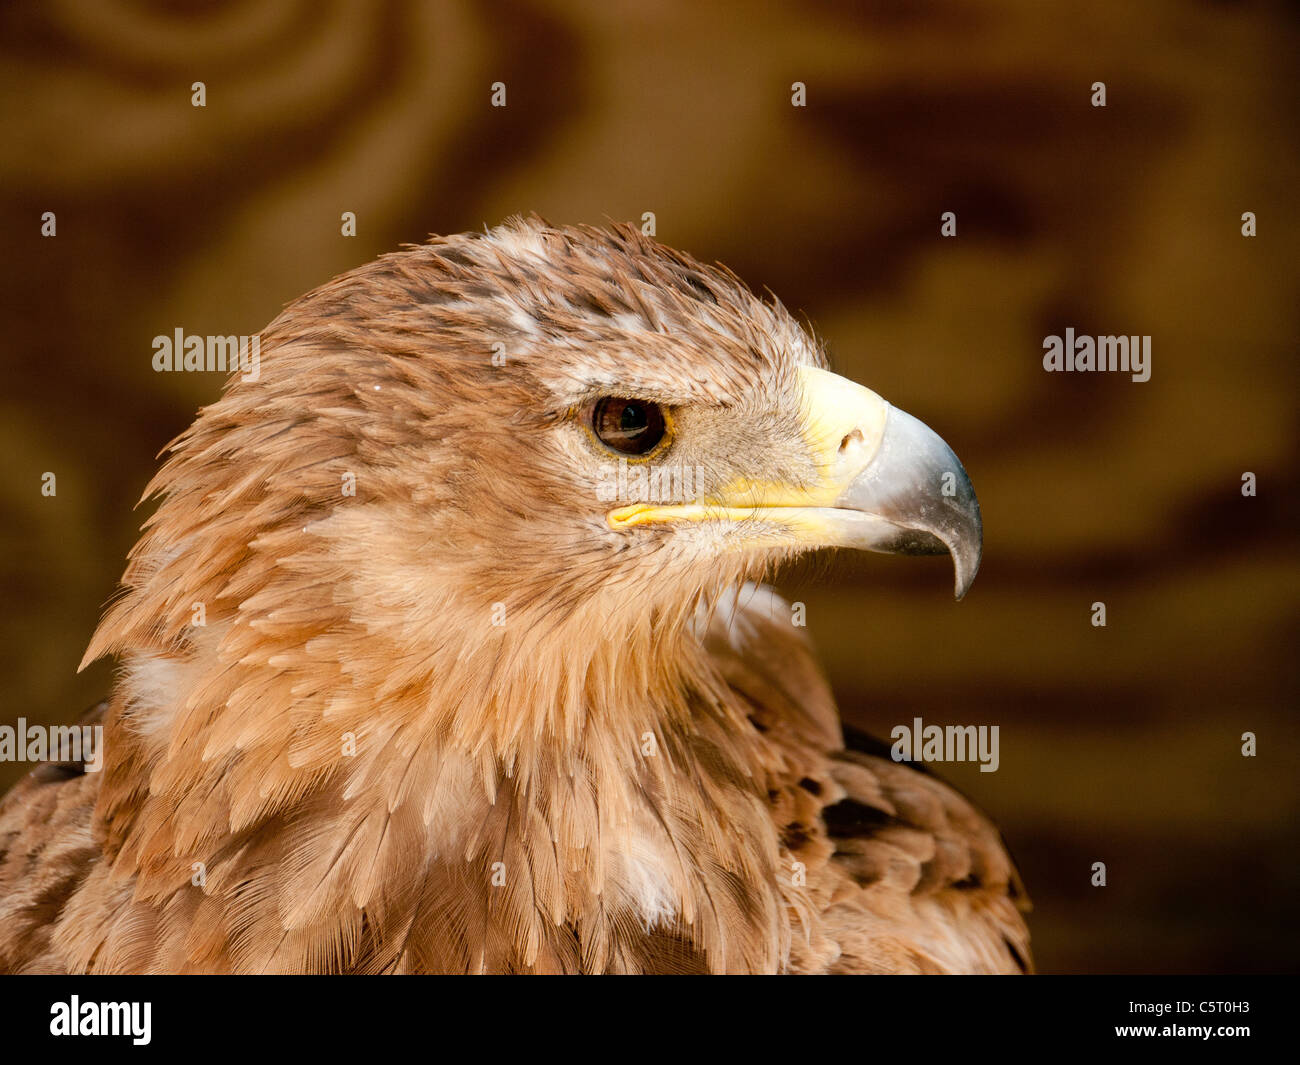 Saker Falcon in the Falconry Center, Morton-in-Marsh, United Kingdom Stock Photo